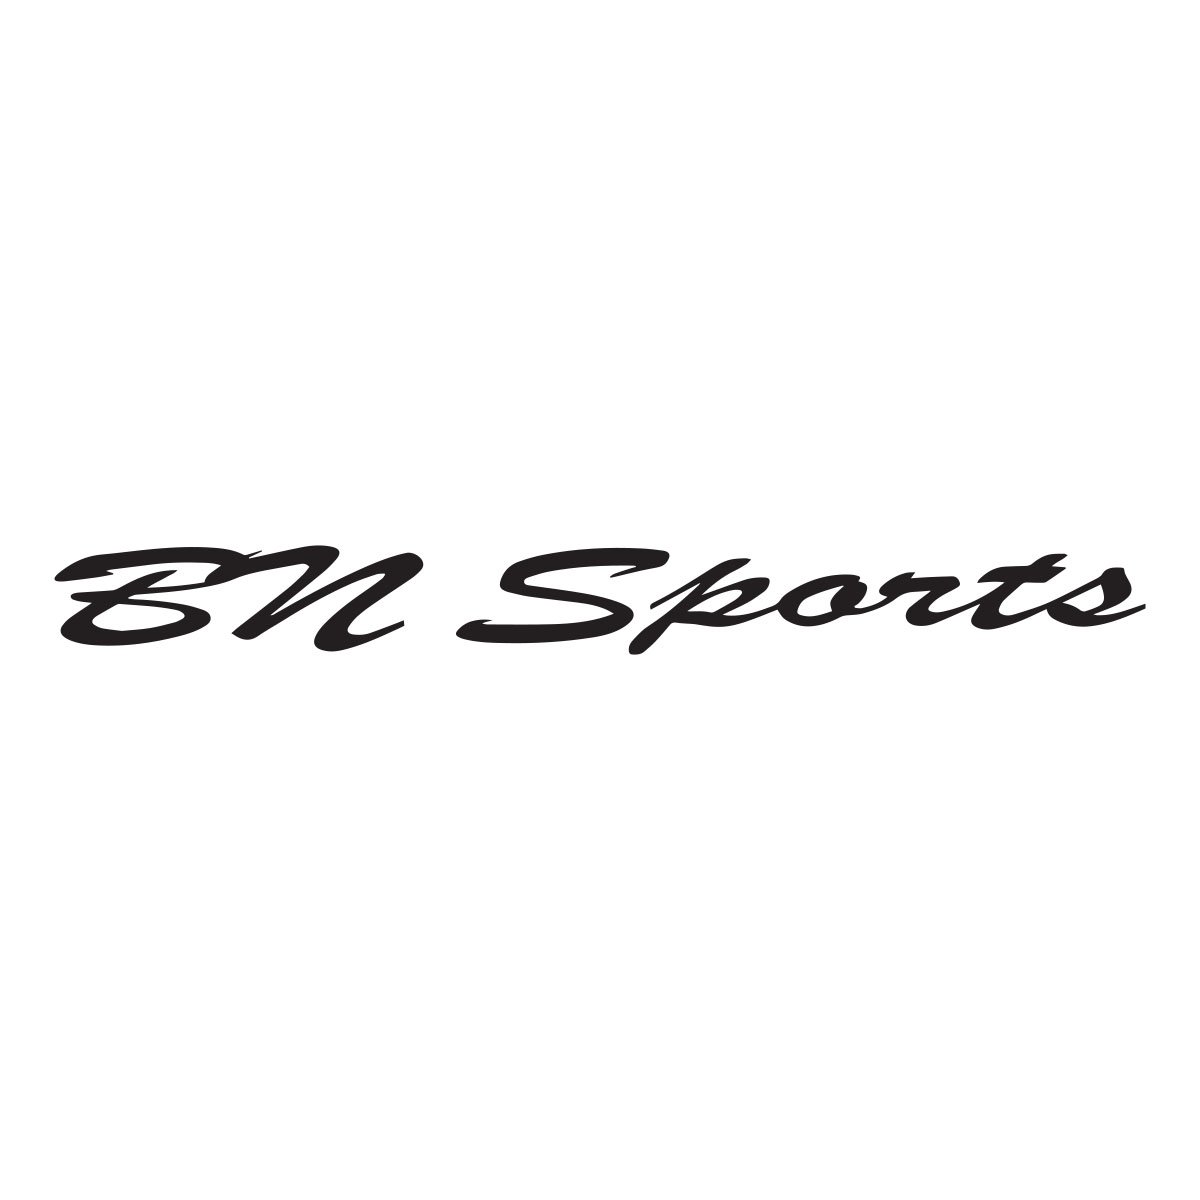 bn sports logo